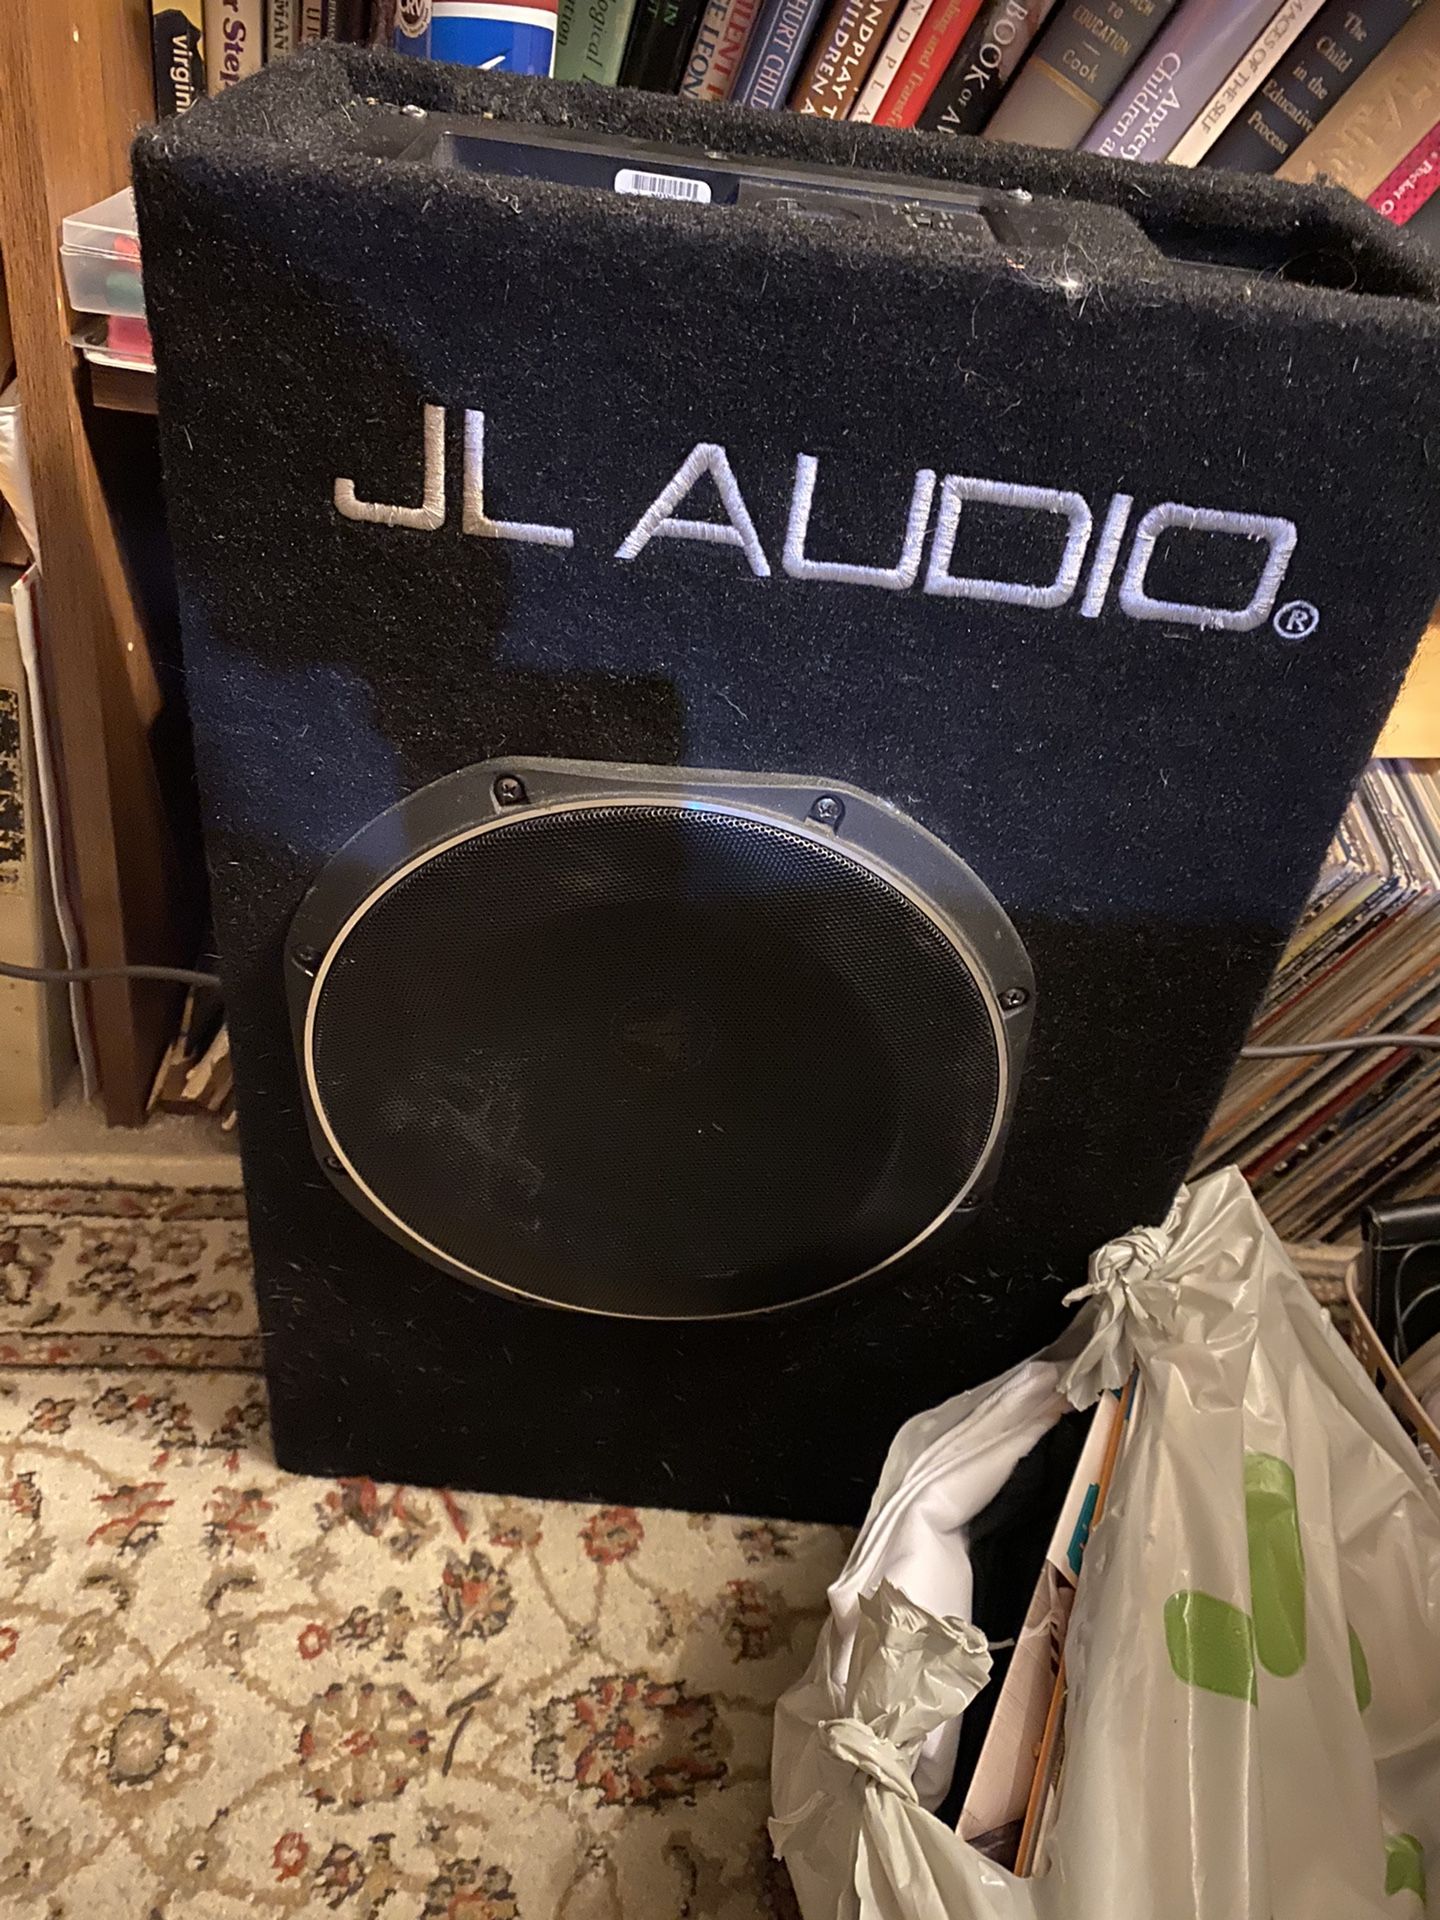 Like New JL Audio 12 Speaker and amp in box.